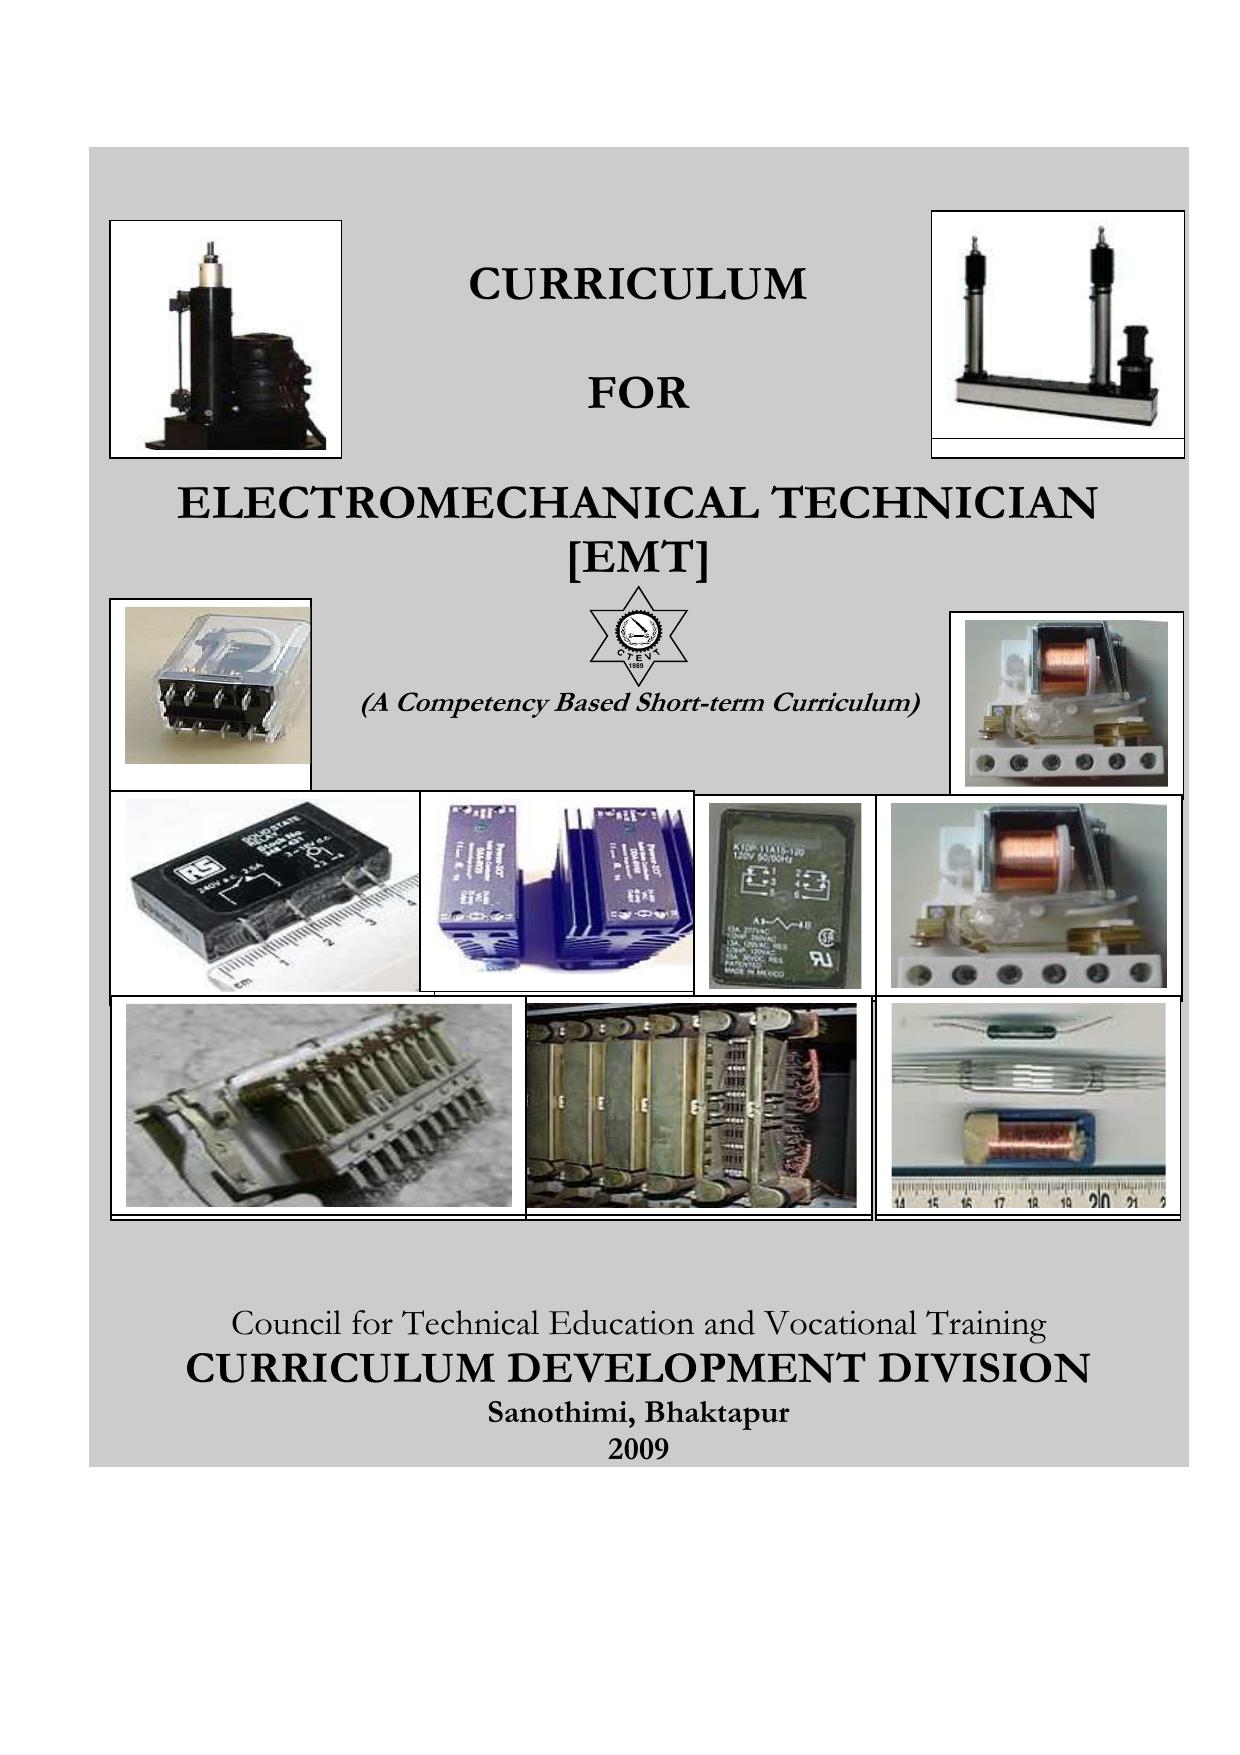 Electromechanical Technician (EMT), 2009